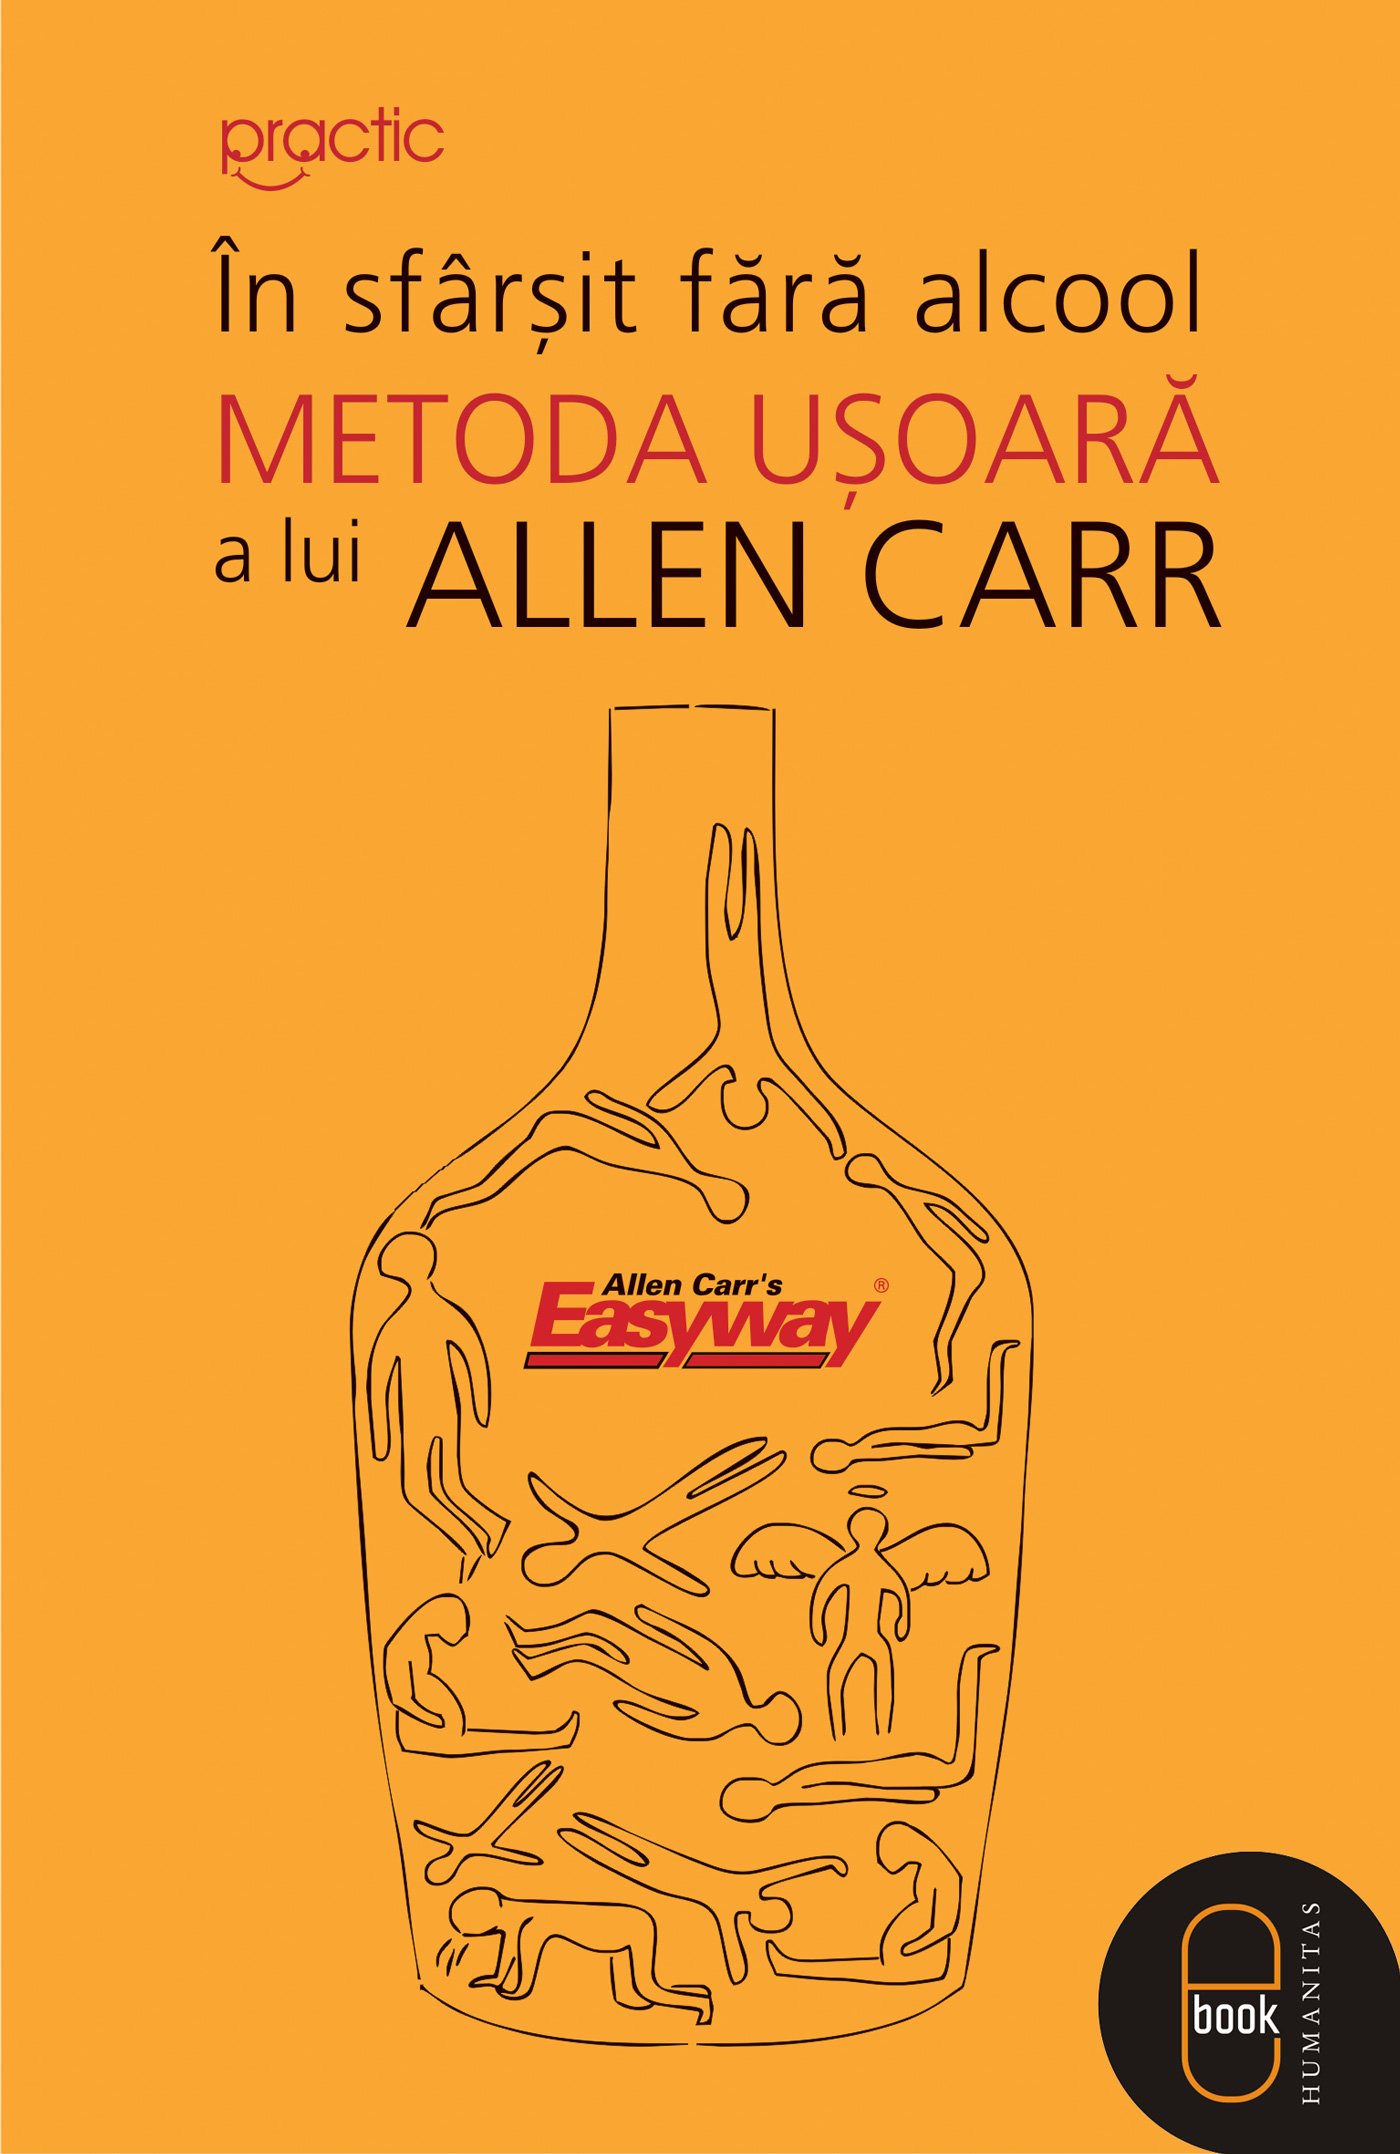 In sfarsit fara alcool: Metoda usoara a lui Allen Carr (epub)